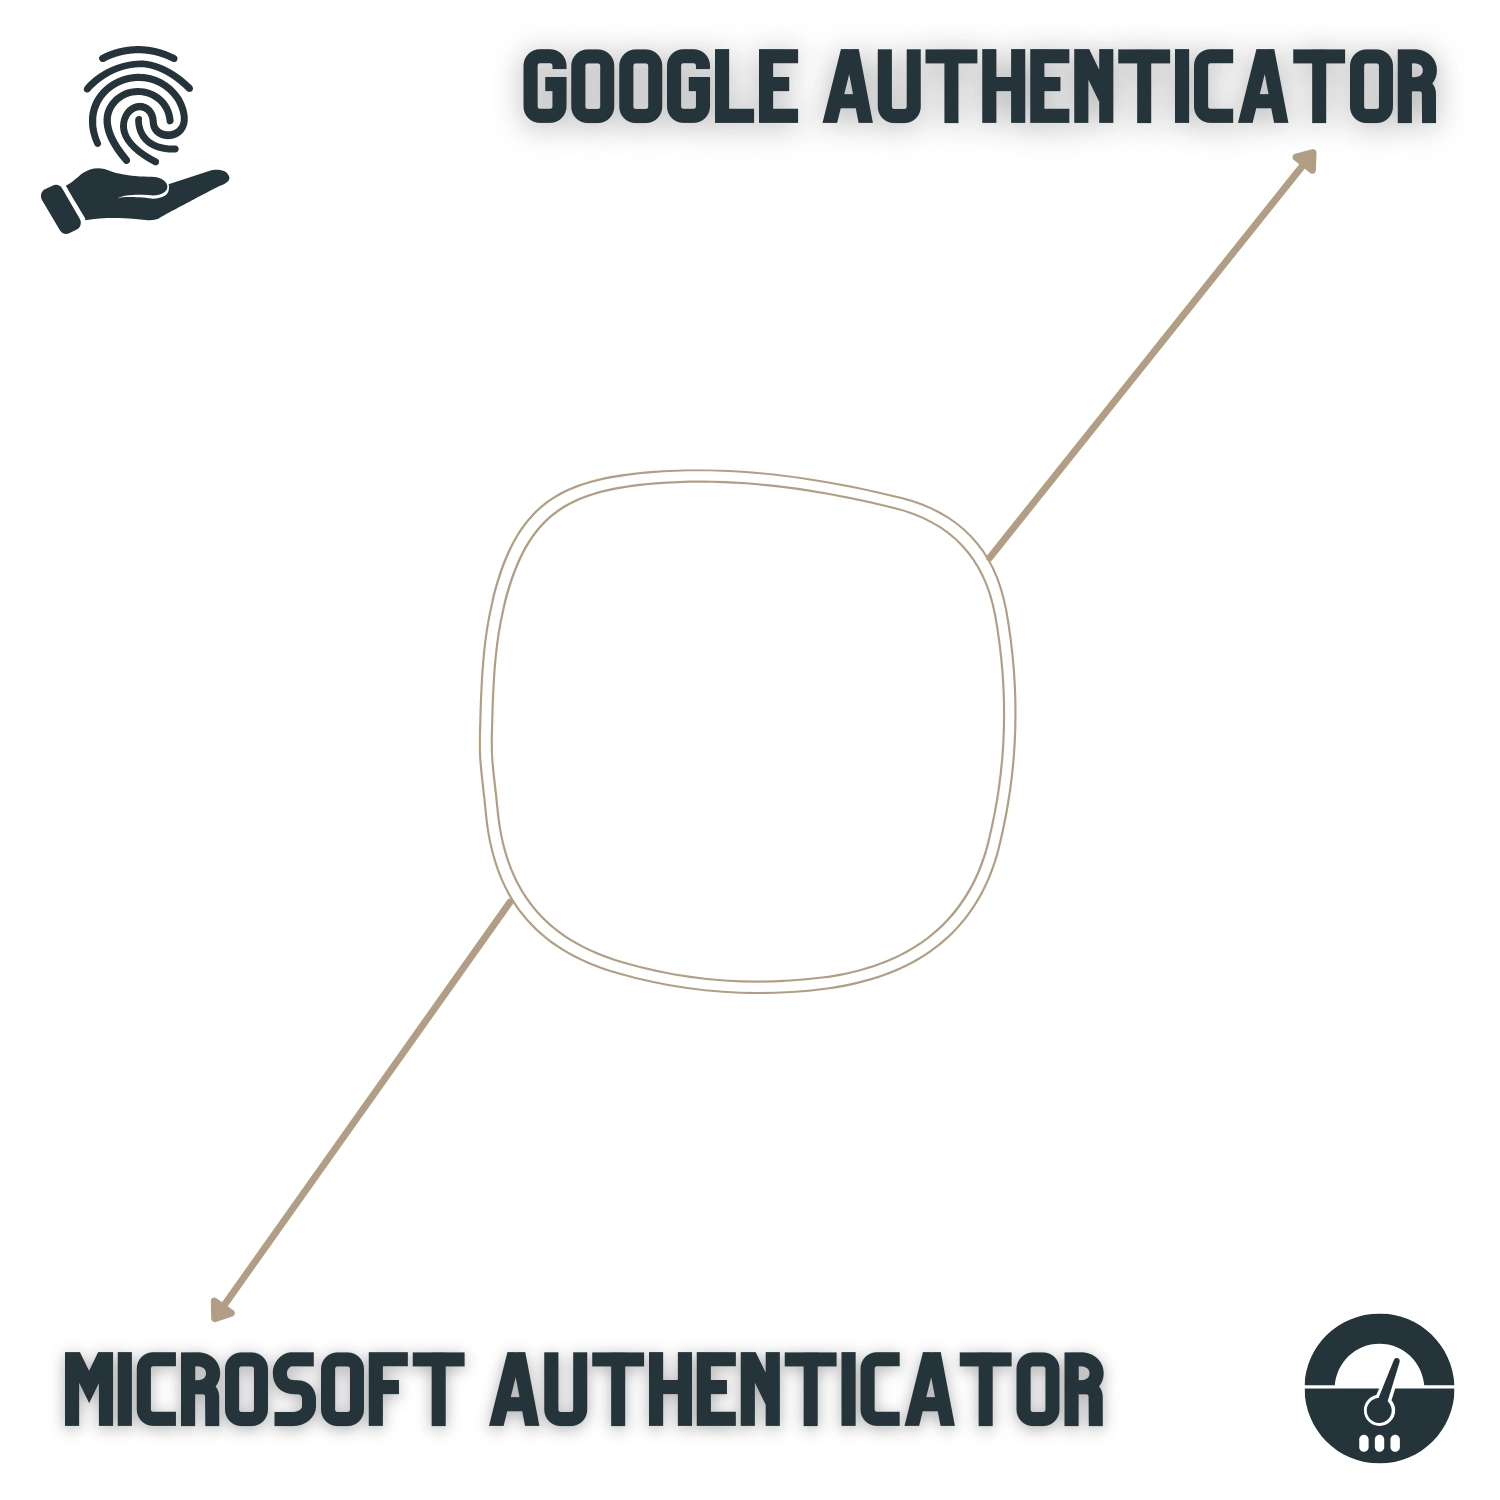 Google Authenticator vs. Microsoft Authenticator